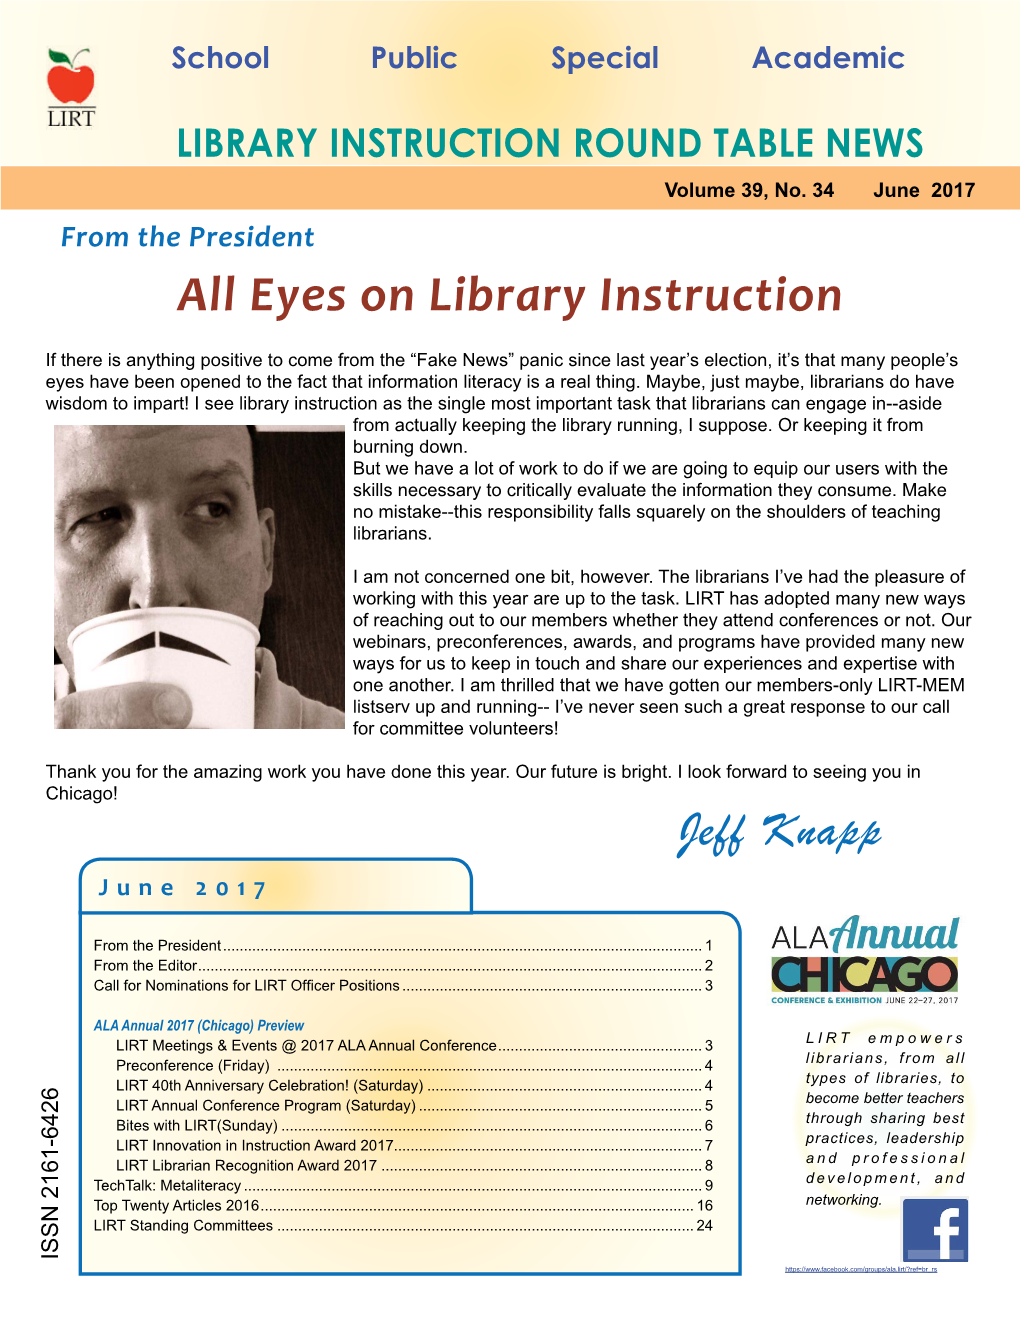 All Eyes on Library Instruction Jeff Knapp